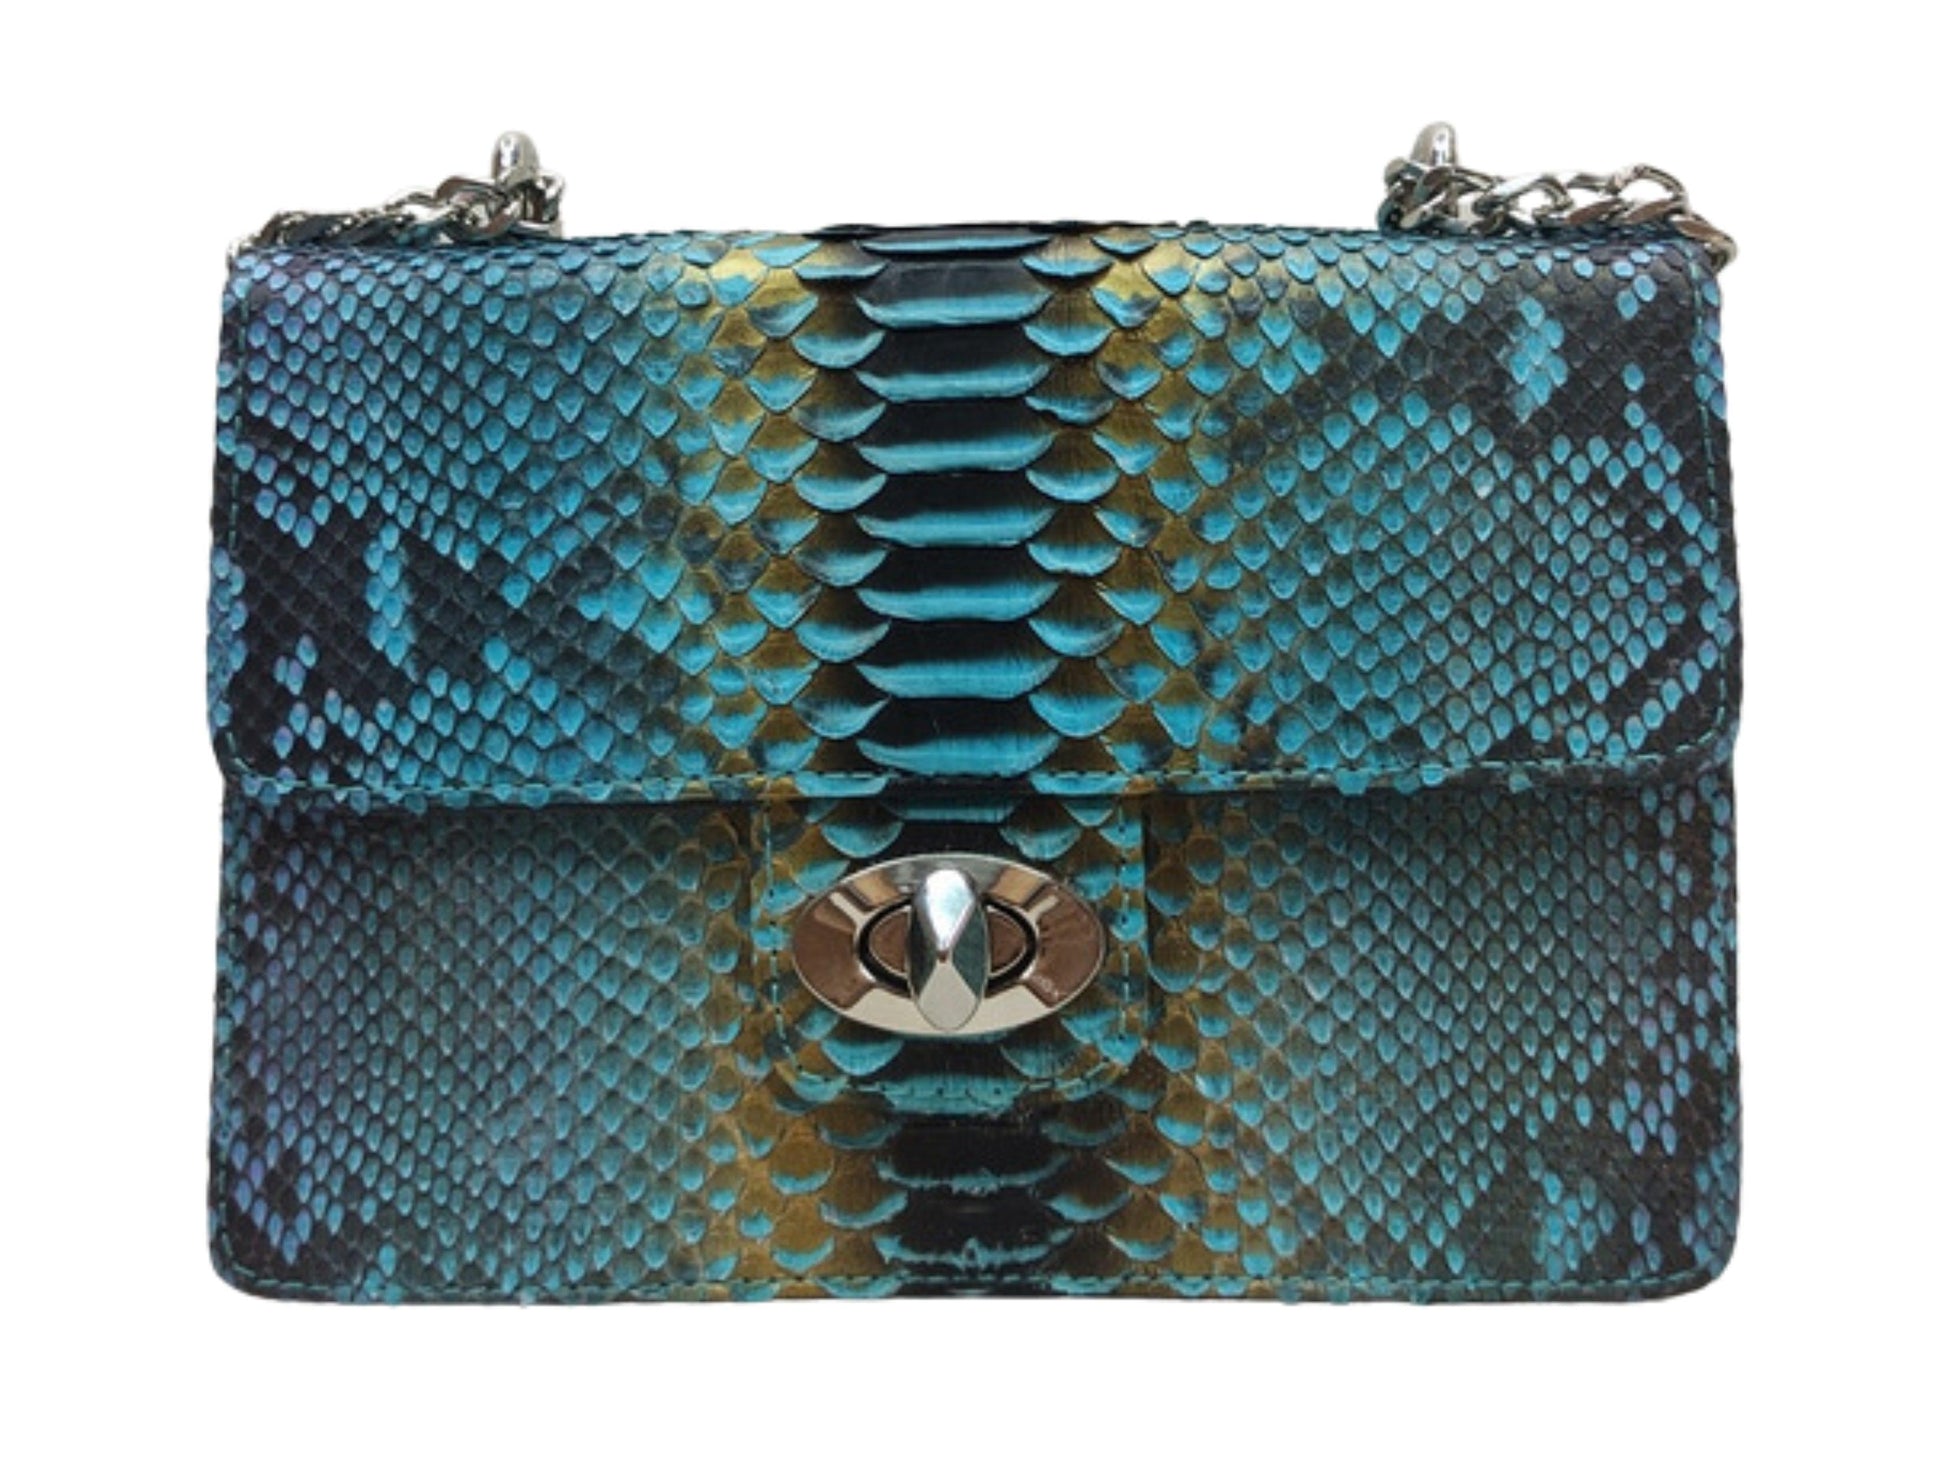 Python Bags Snakeskin Evening Handbag for Women Turqouise Python Jacket by LFM Fashion